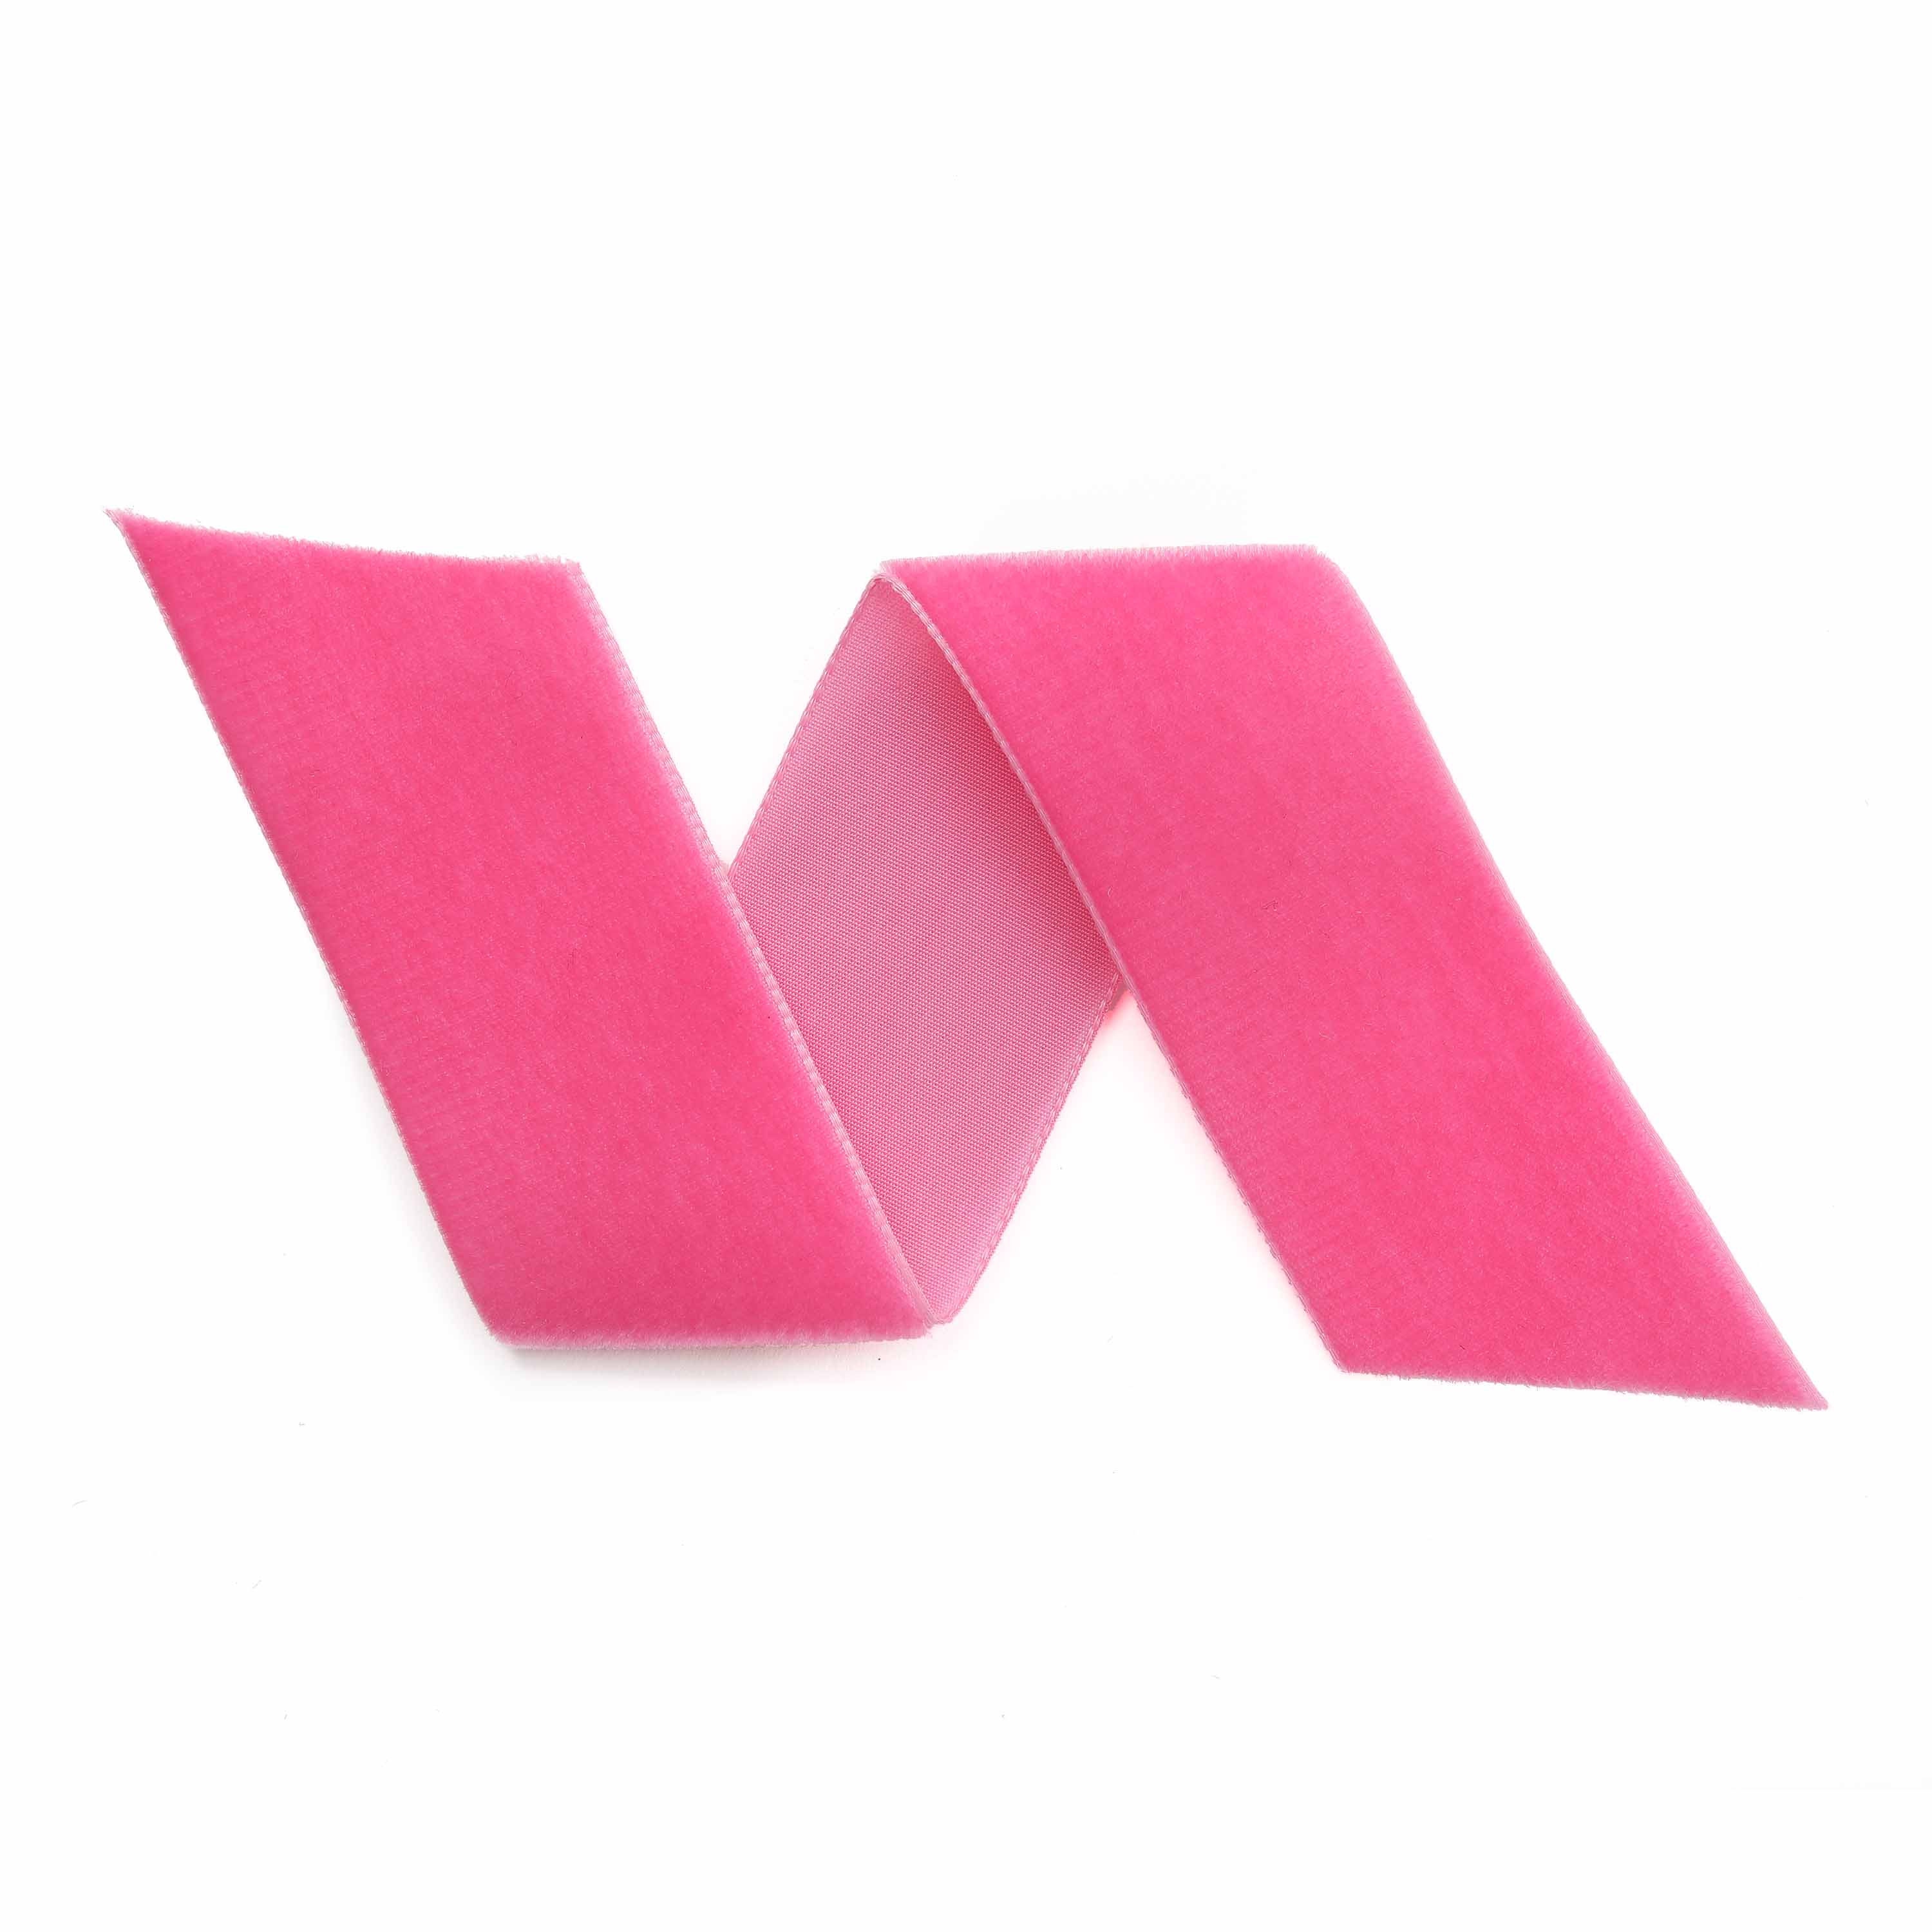 Hot Pink Ribbon with Wings Car Mat